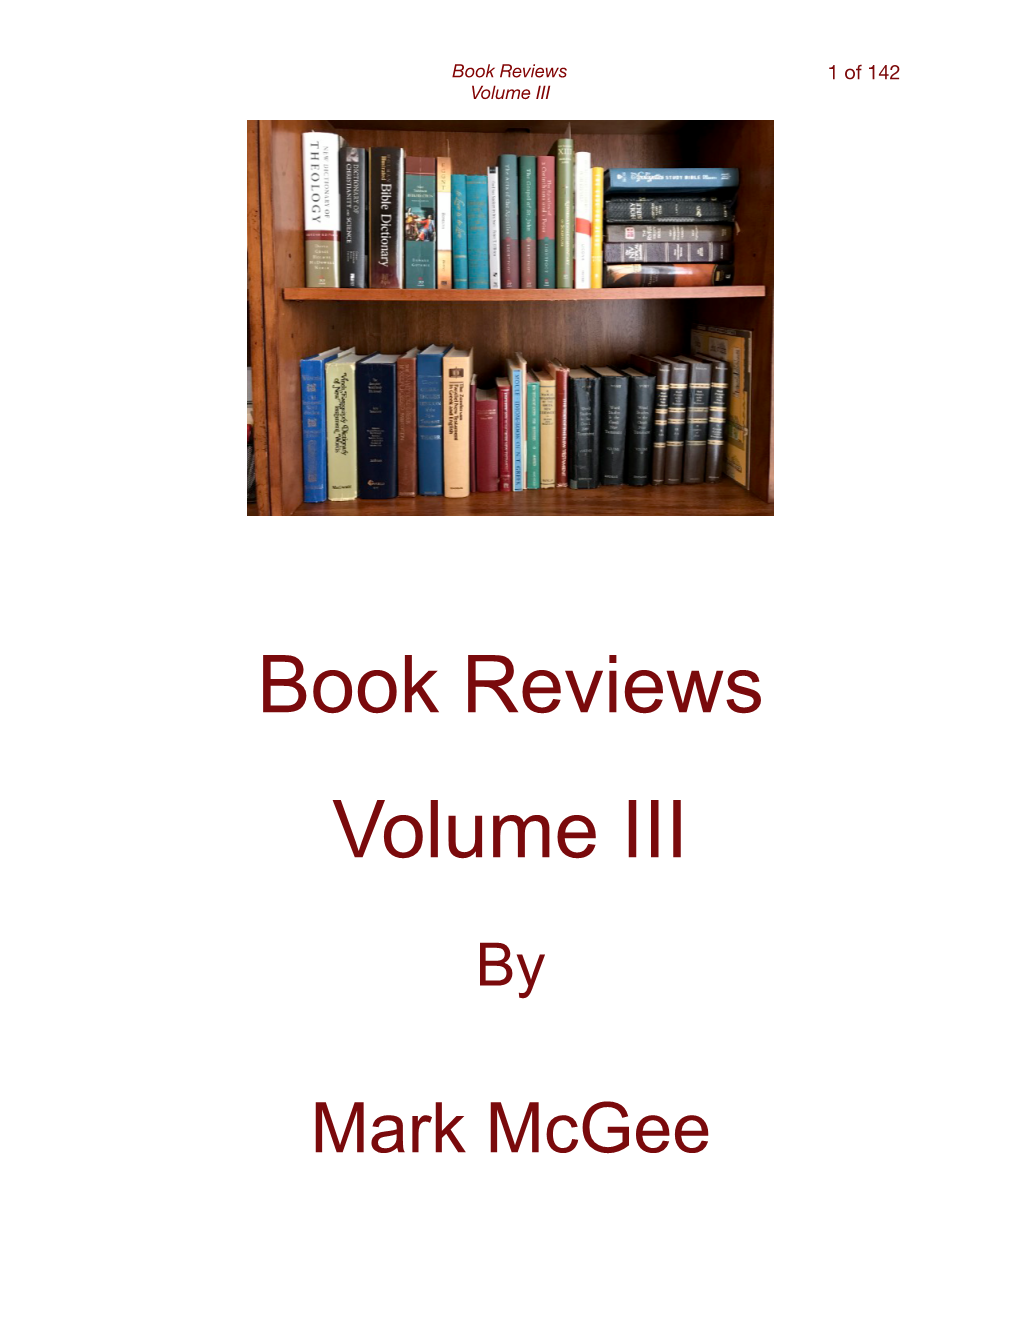 Book Reviews Volume III